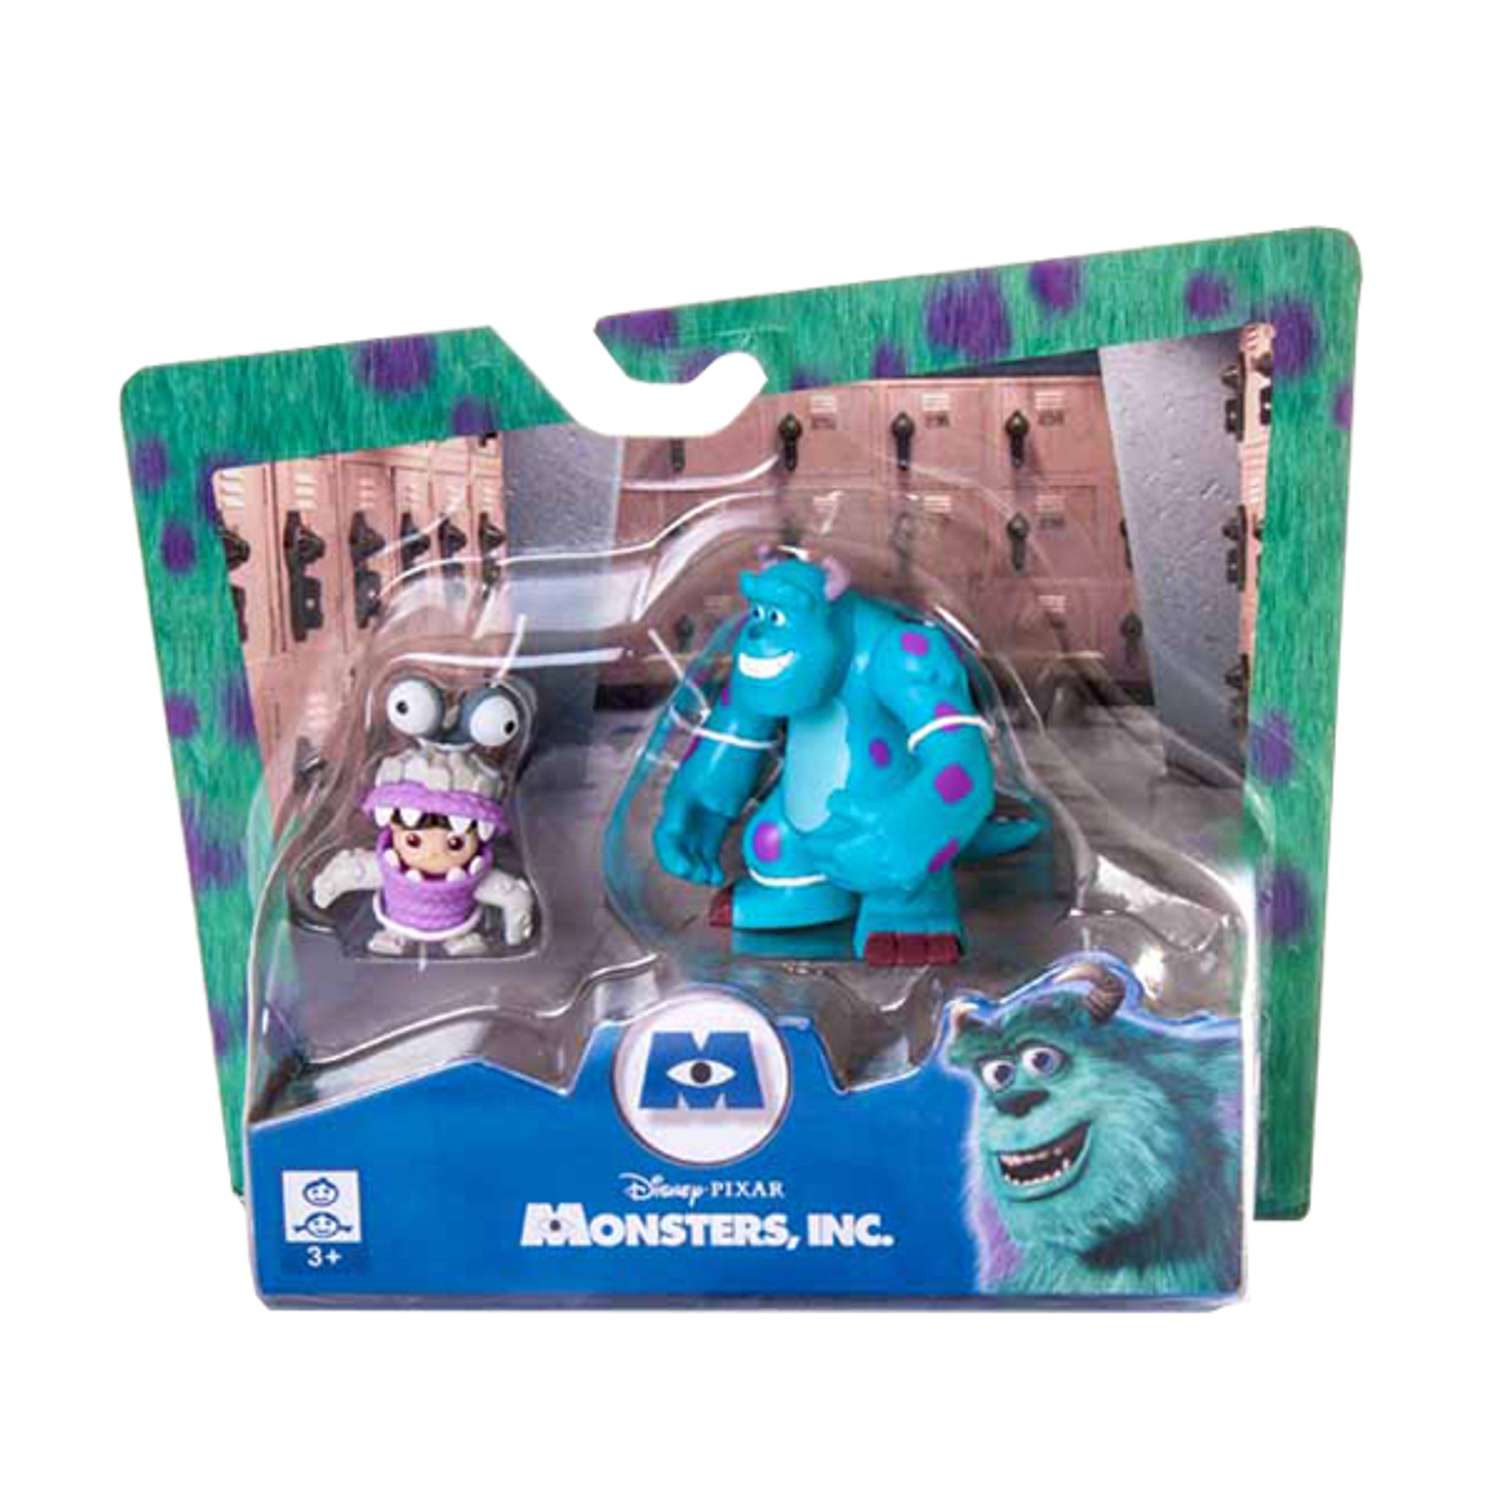 Monsters Inc Monsters 2 фигурки 5 см в ассортименте - фото 2